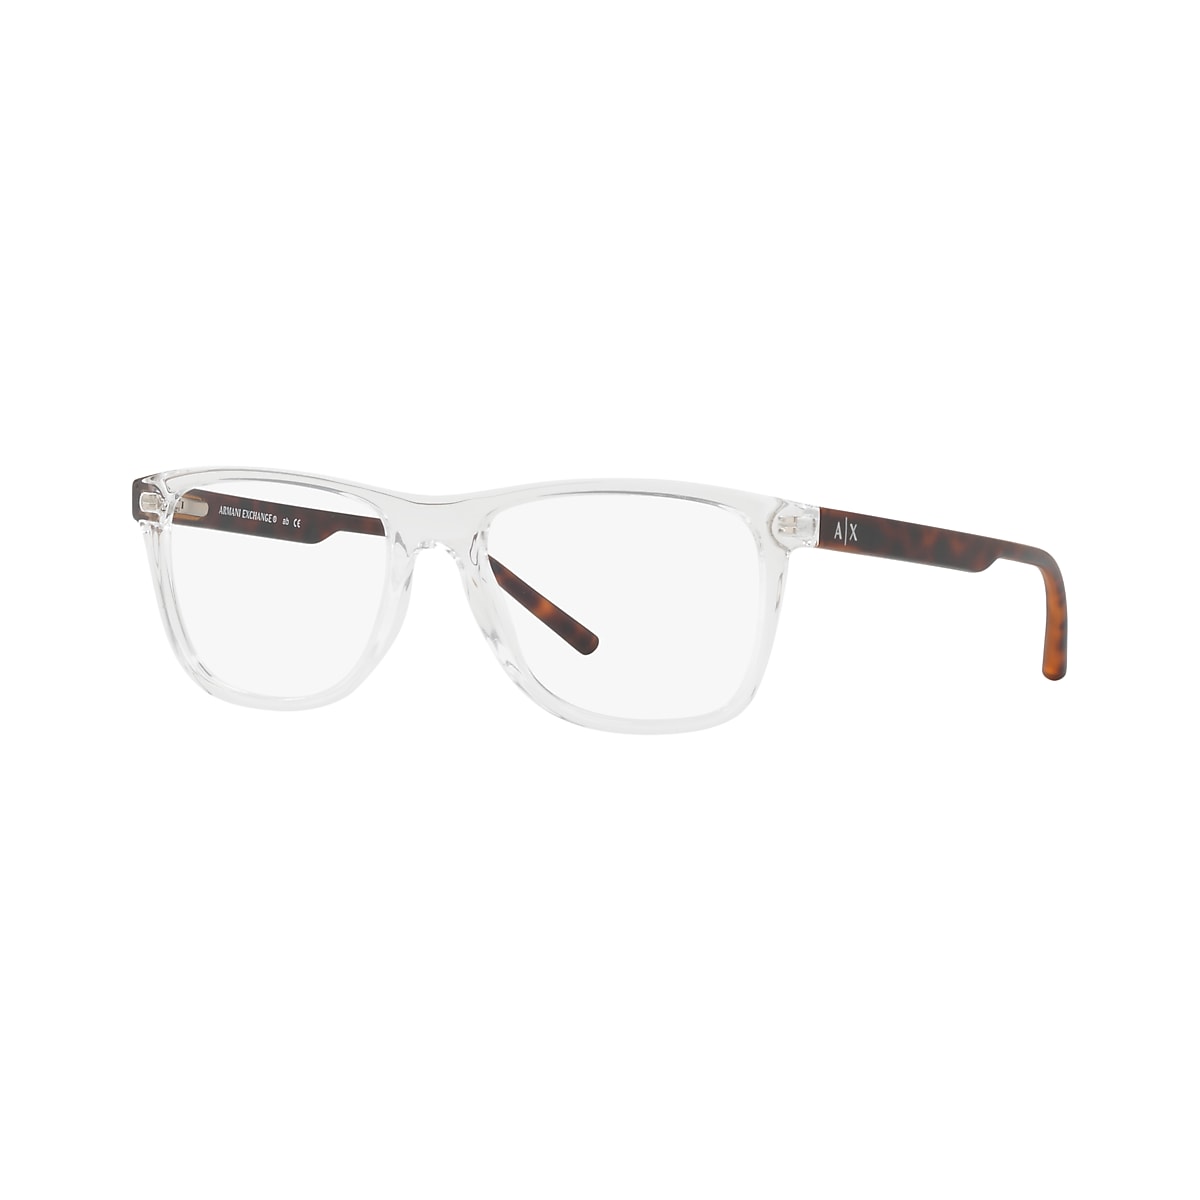 Introducir 83+ imagen armani exchange glasses clear frames